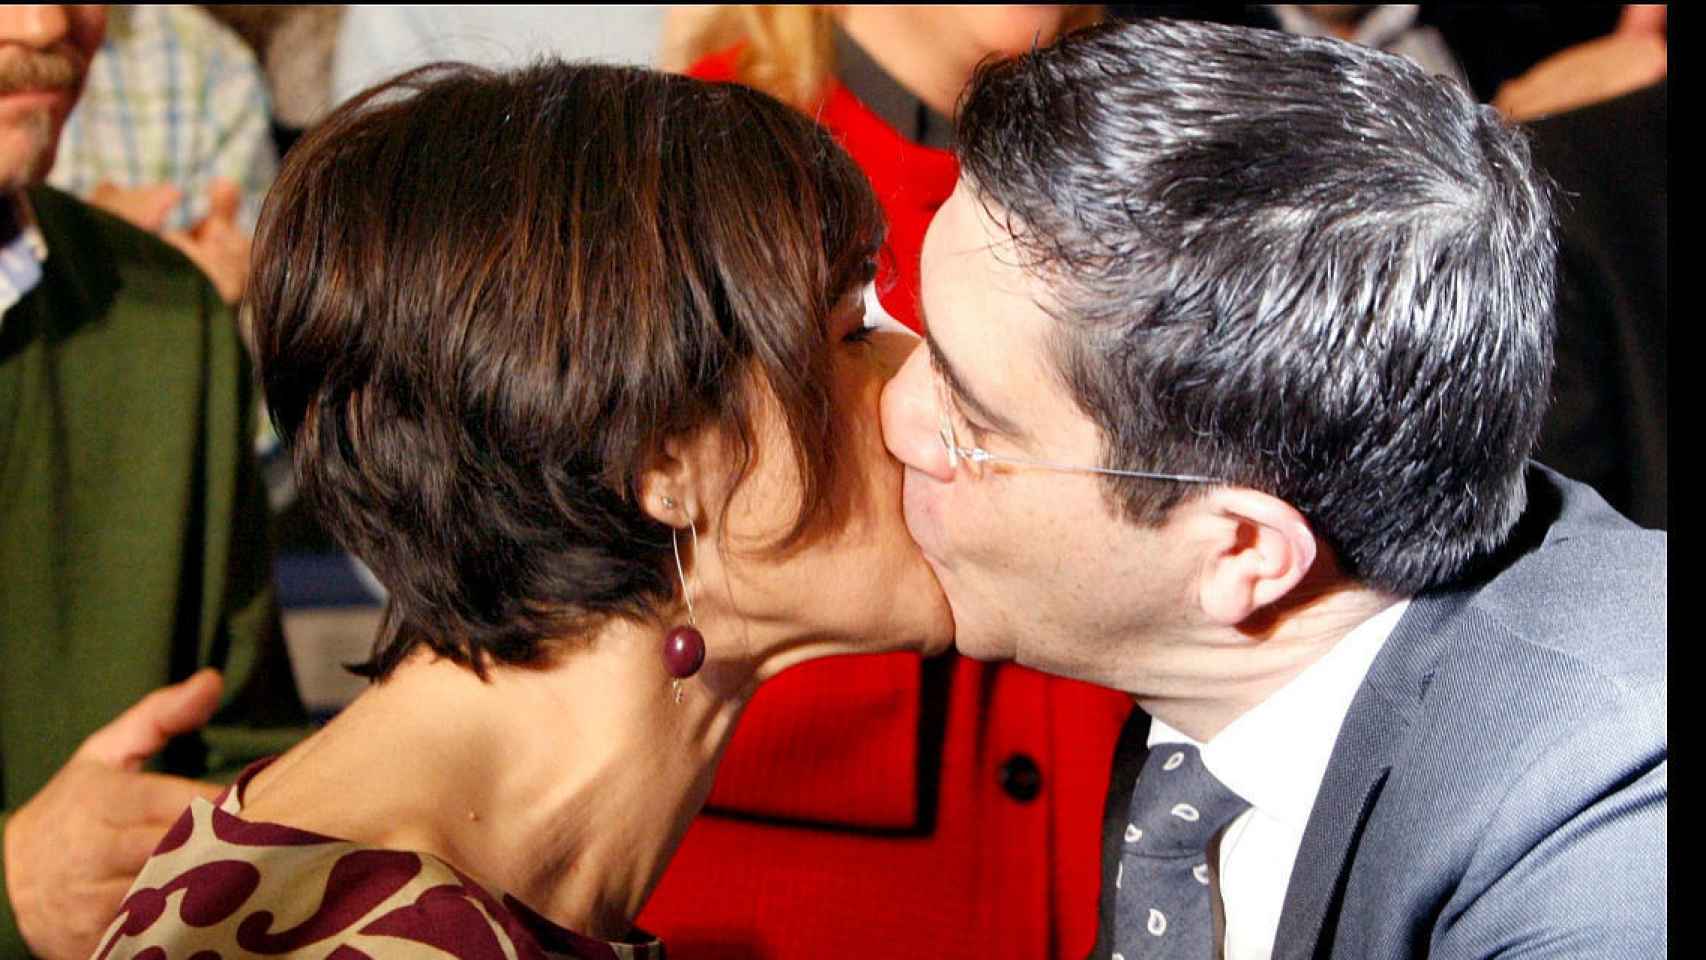 Begoña le arrancó a Patxi un beso en plena precampaña electoral vasca